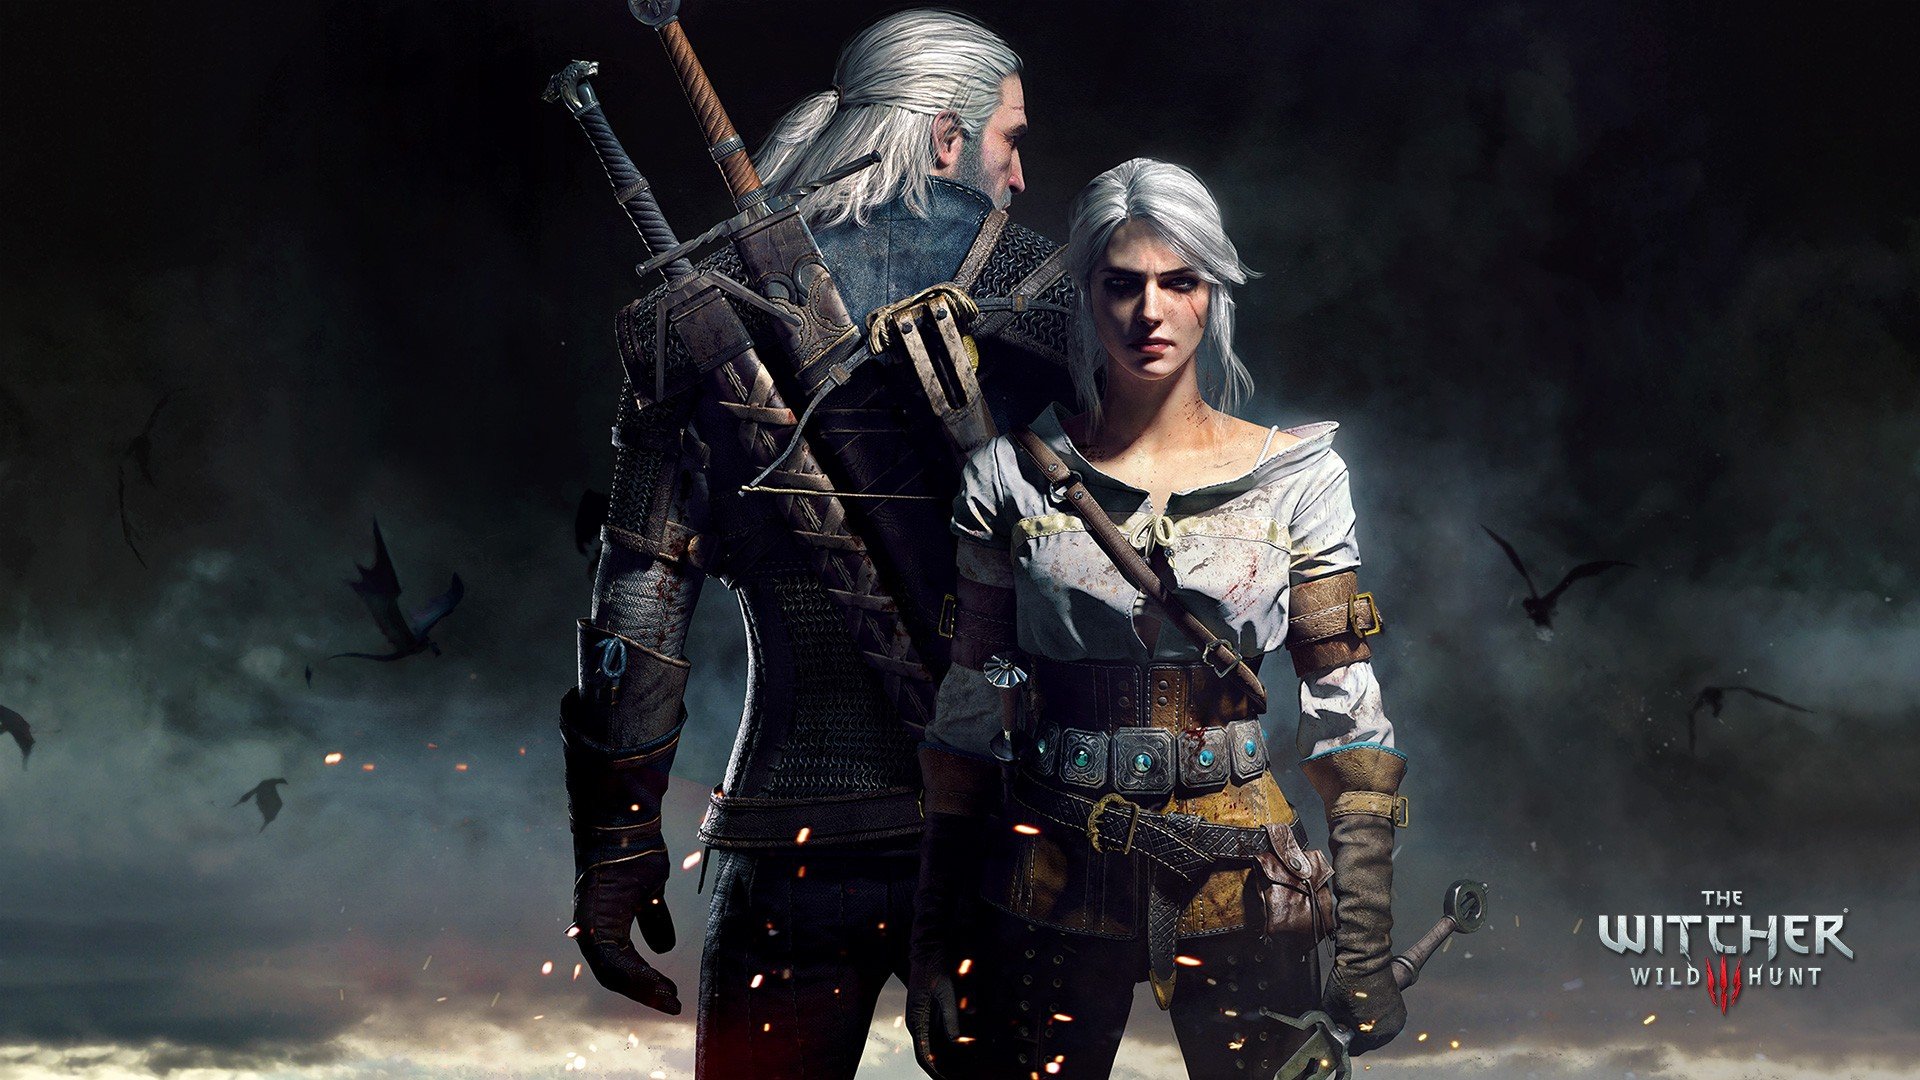 Geralt of Rivia, Cirilla Fiona Elen Riannon, Ciri Wallpaper